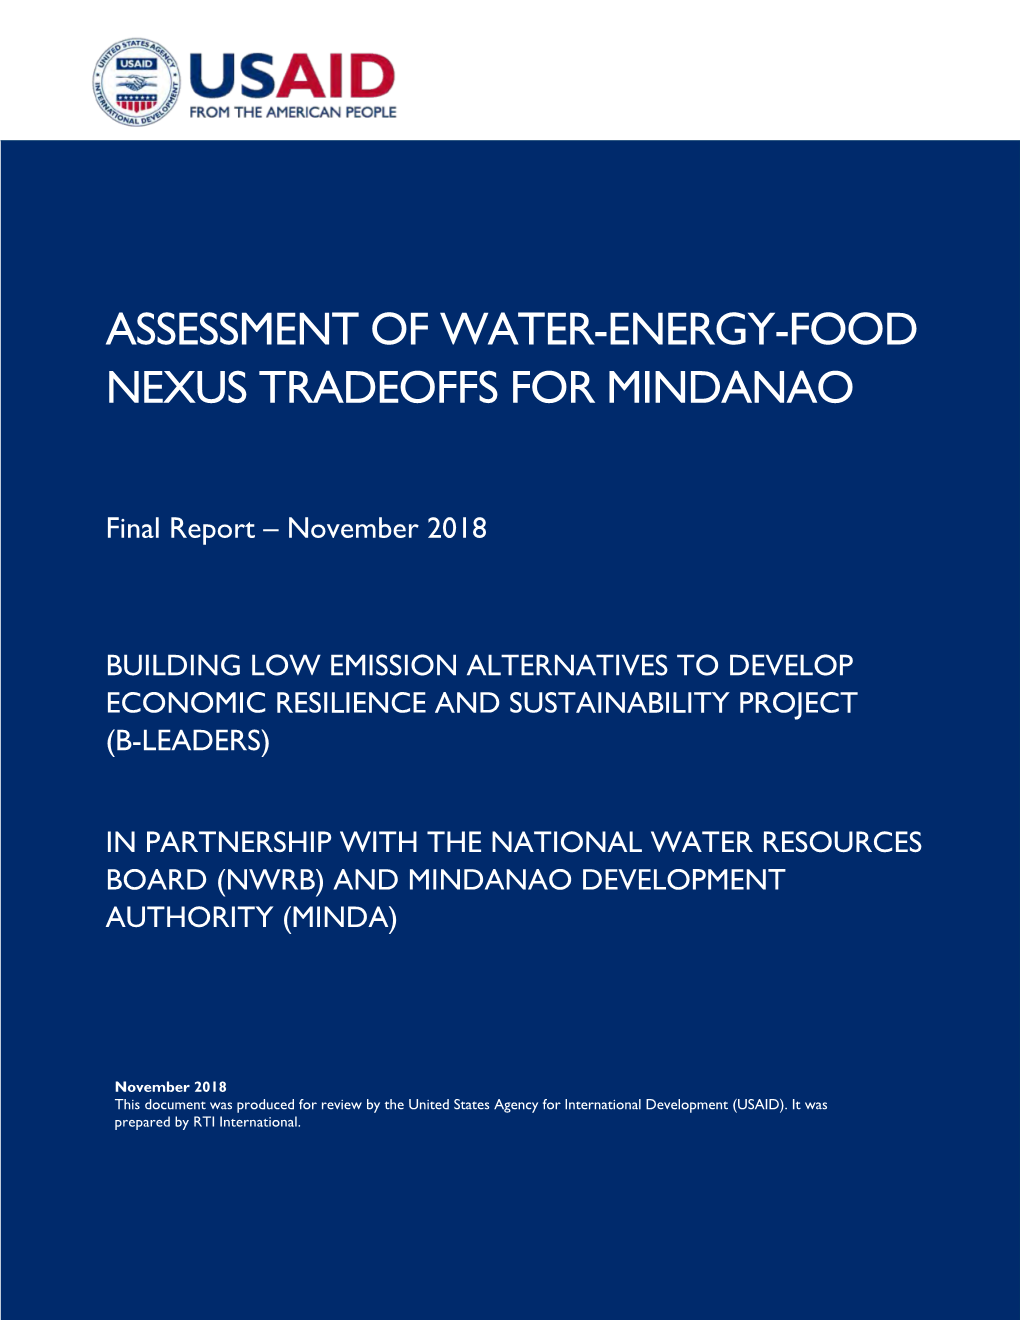 Assessment of Water-Energy-Food Nexus Tradeoffs for Mindanao